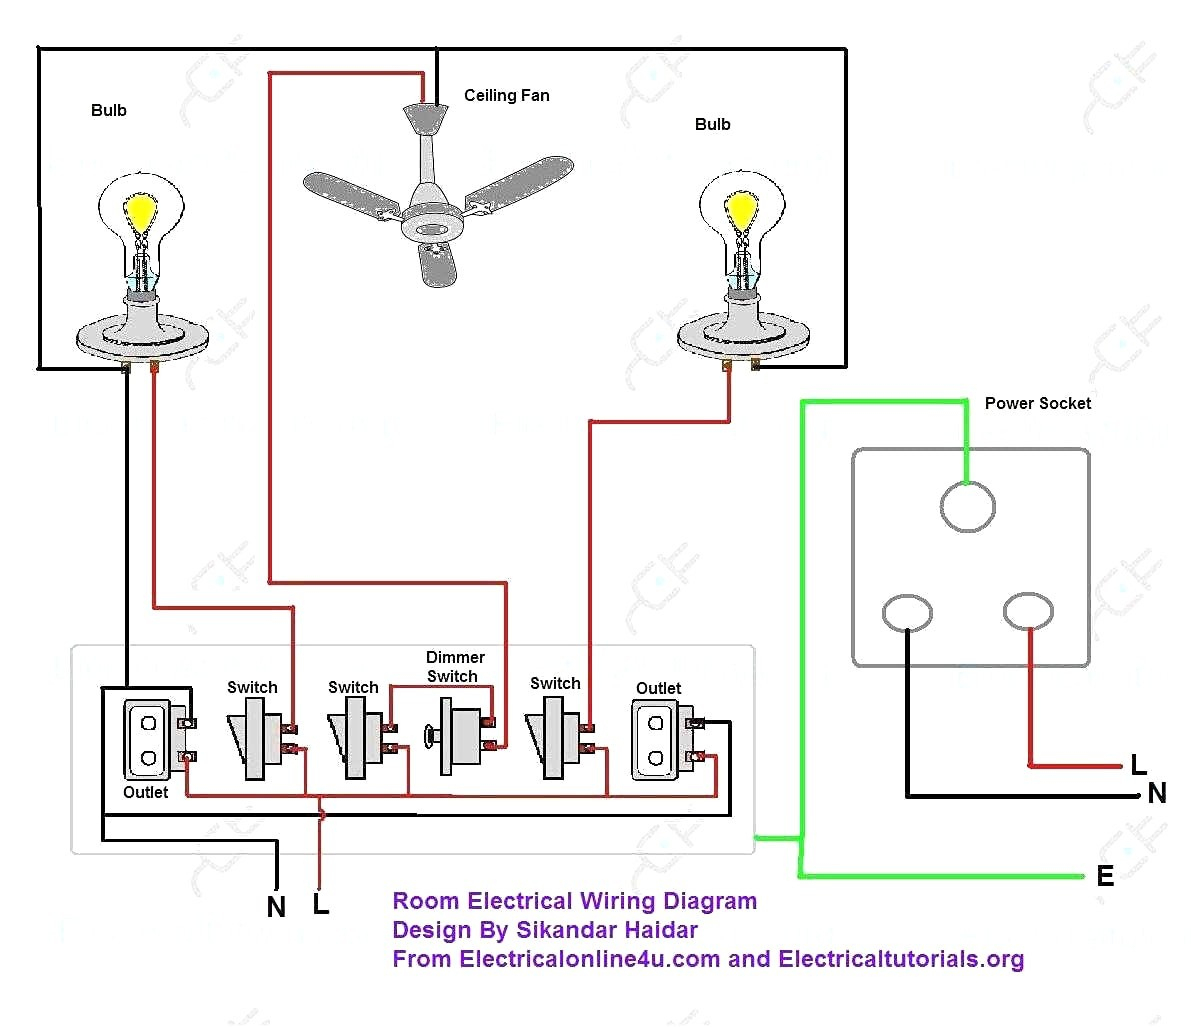 Home Wiring | Wiring Diagram - Electric Heater Wiring Diagram